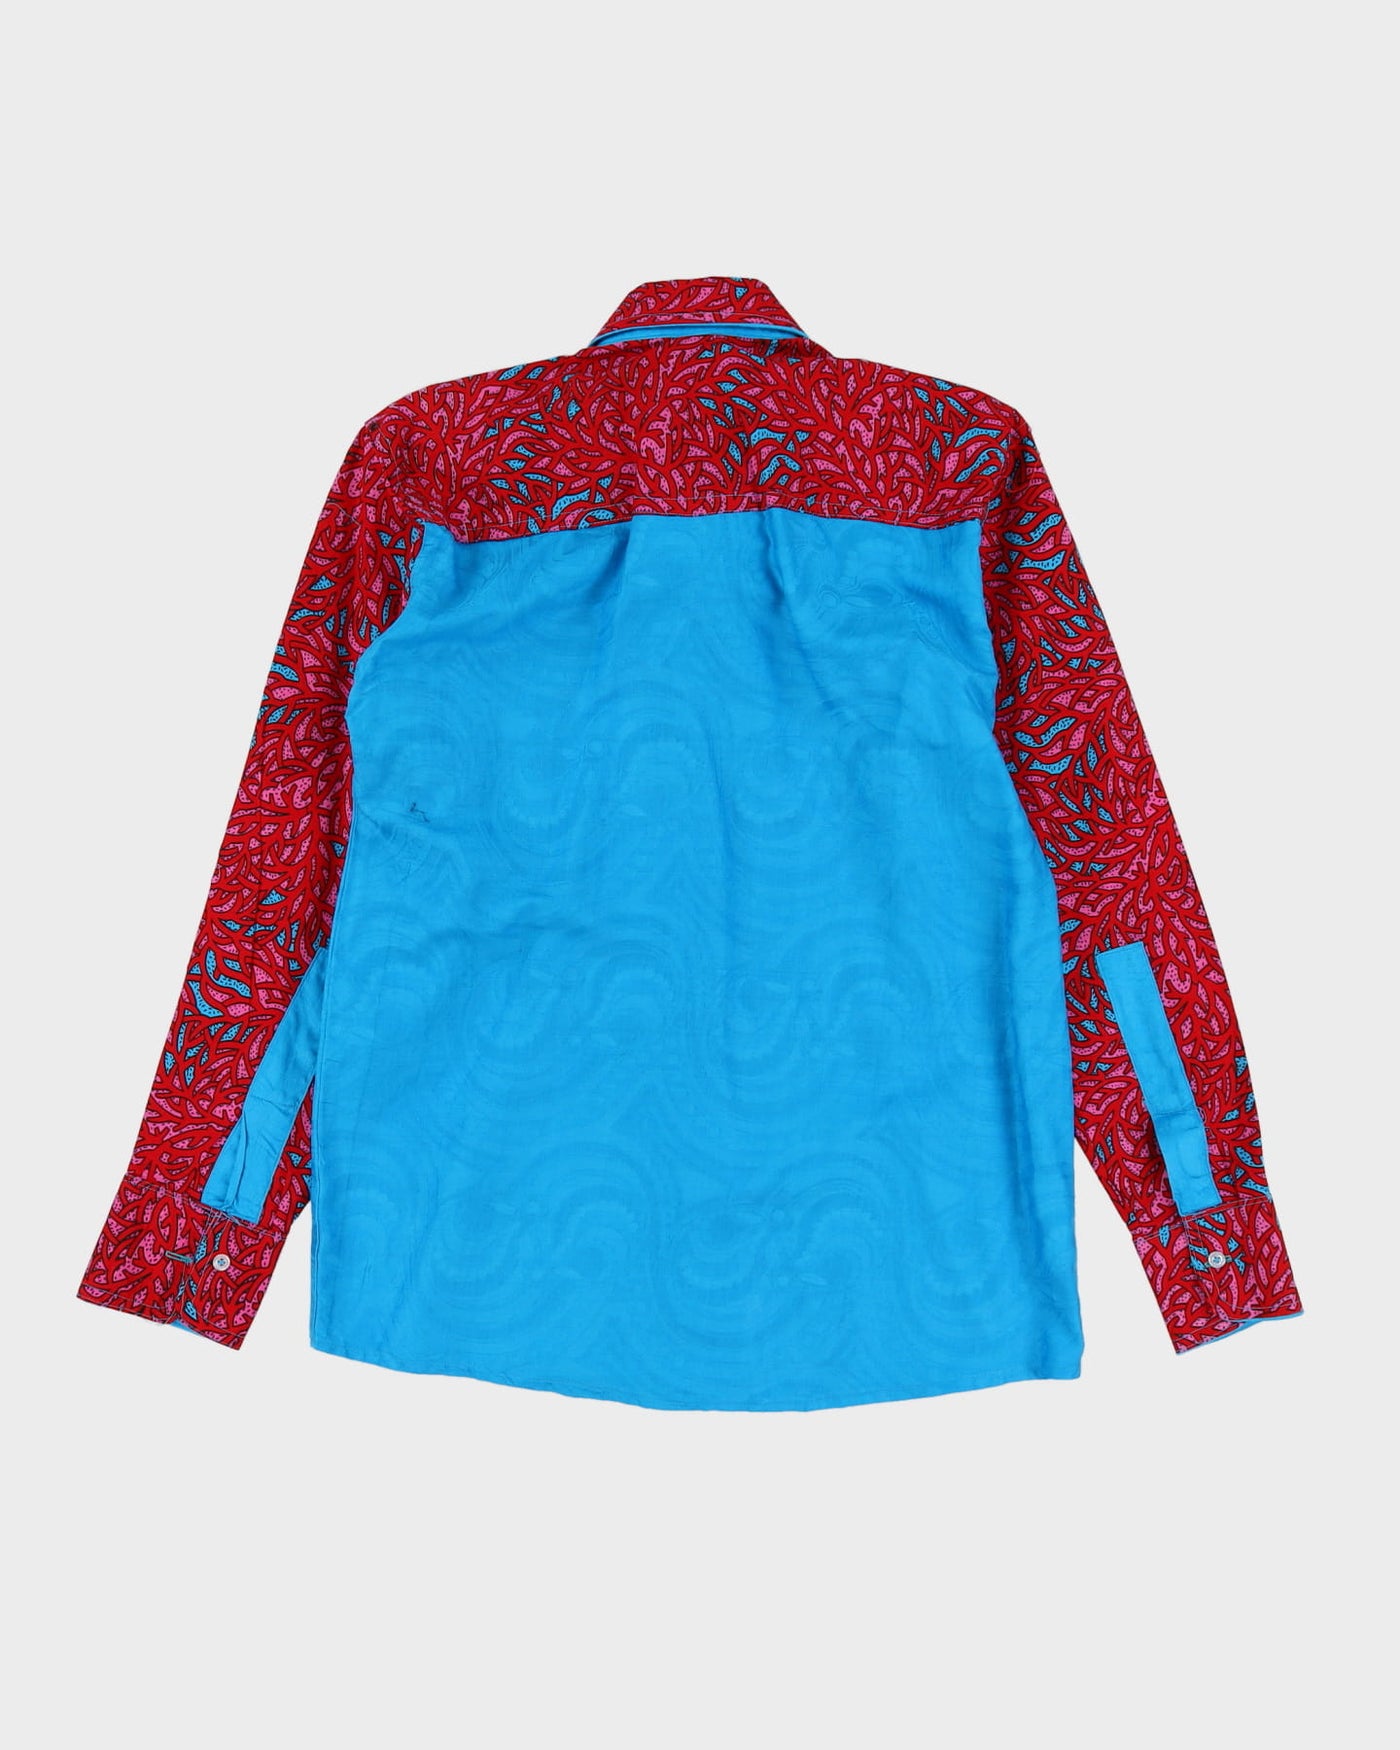 Vintage 90s Blue / Pink 70s Style Patterned Shirt - L